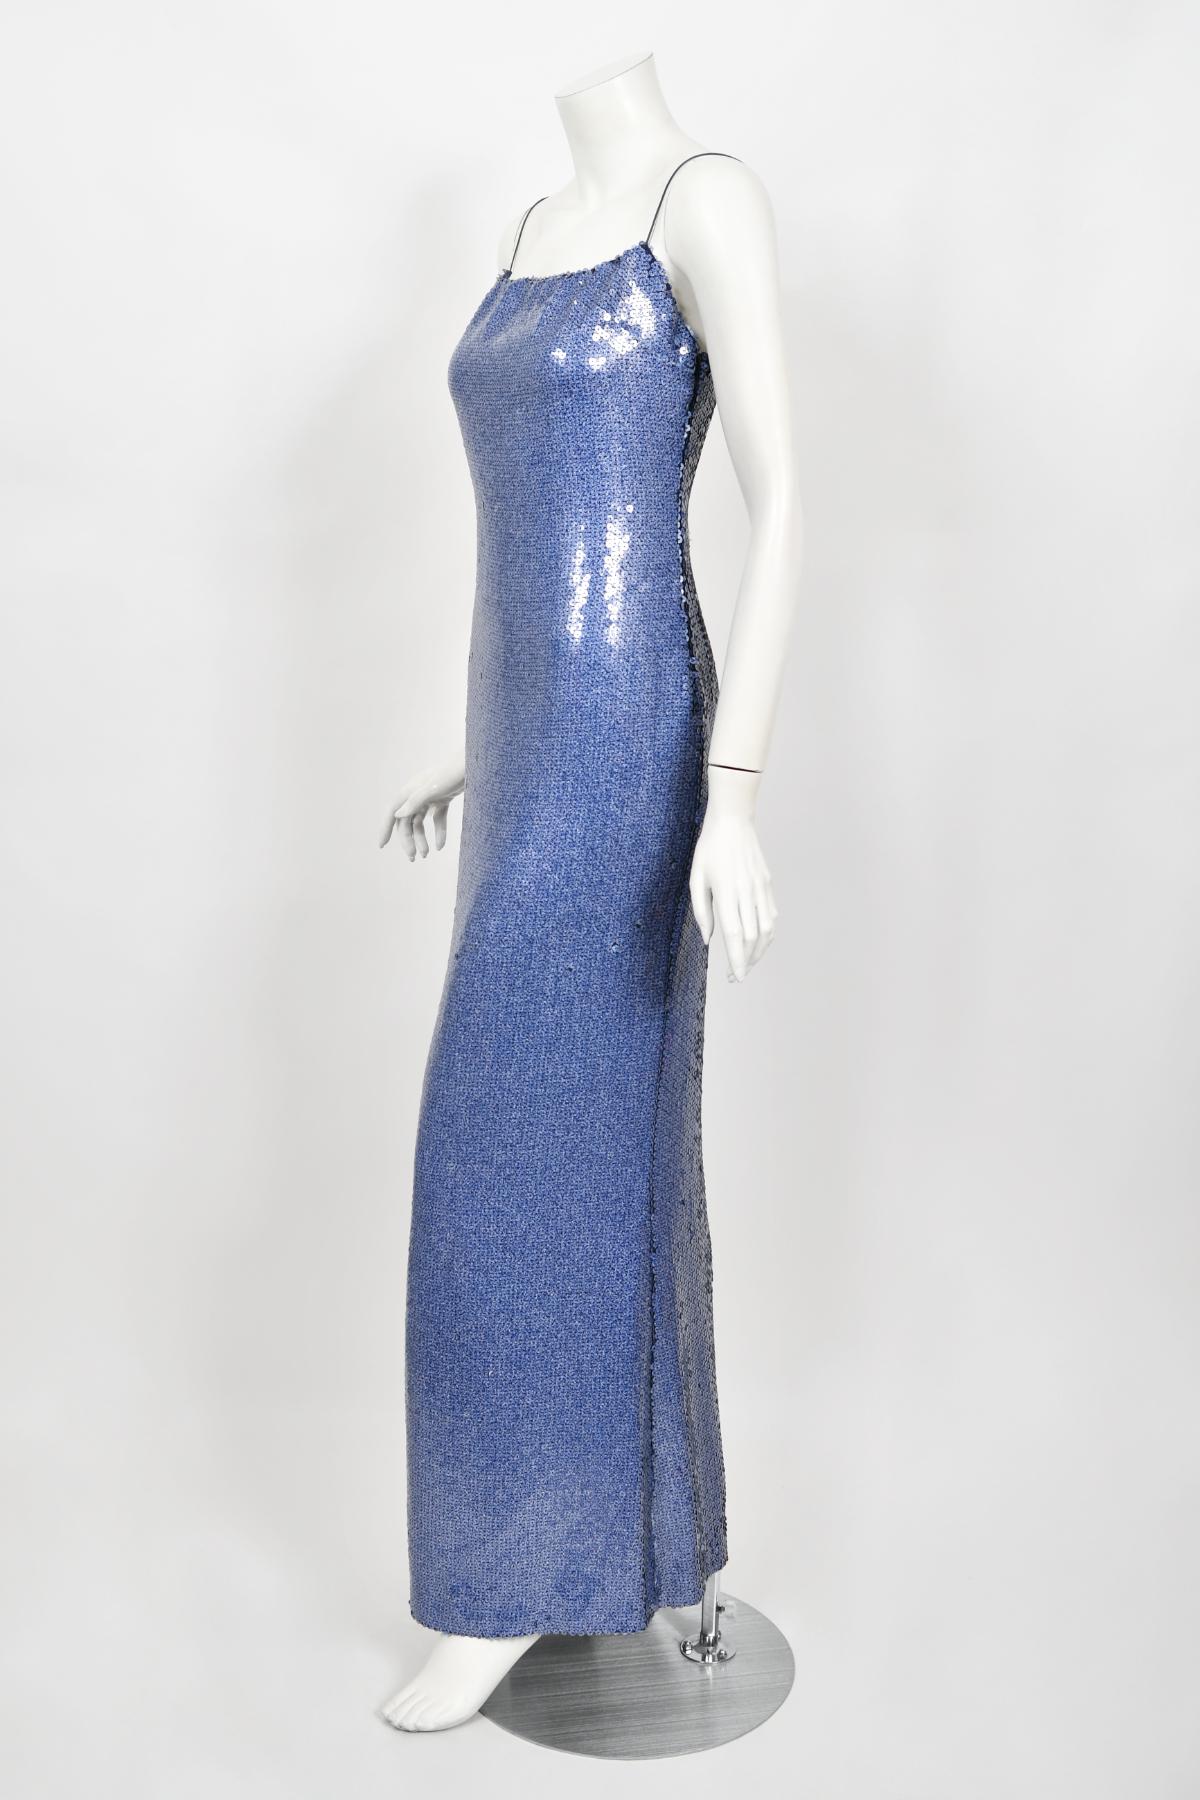 2000 Christian Dior by John Galliano Fully-Sequin Ocean Blue Bias-Cut Slip Gown  1